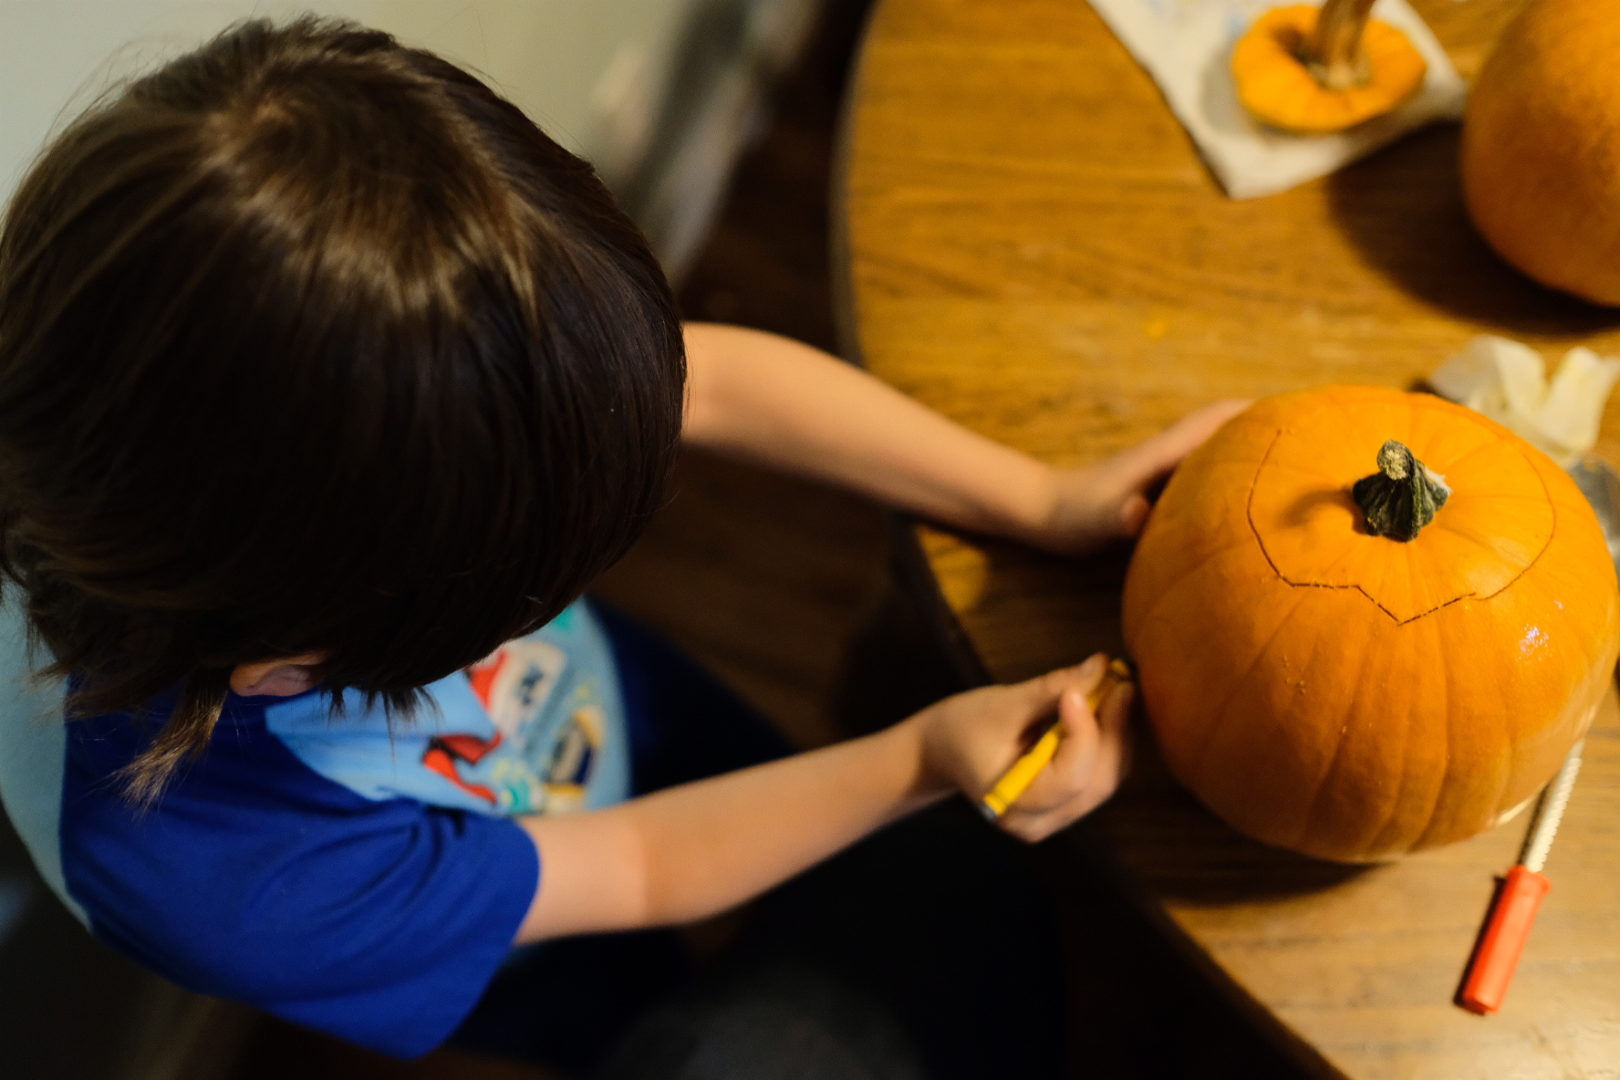 Emmett draws the eyes on his pumpkin